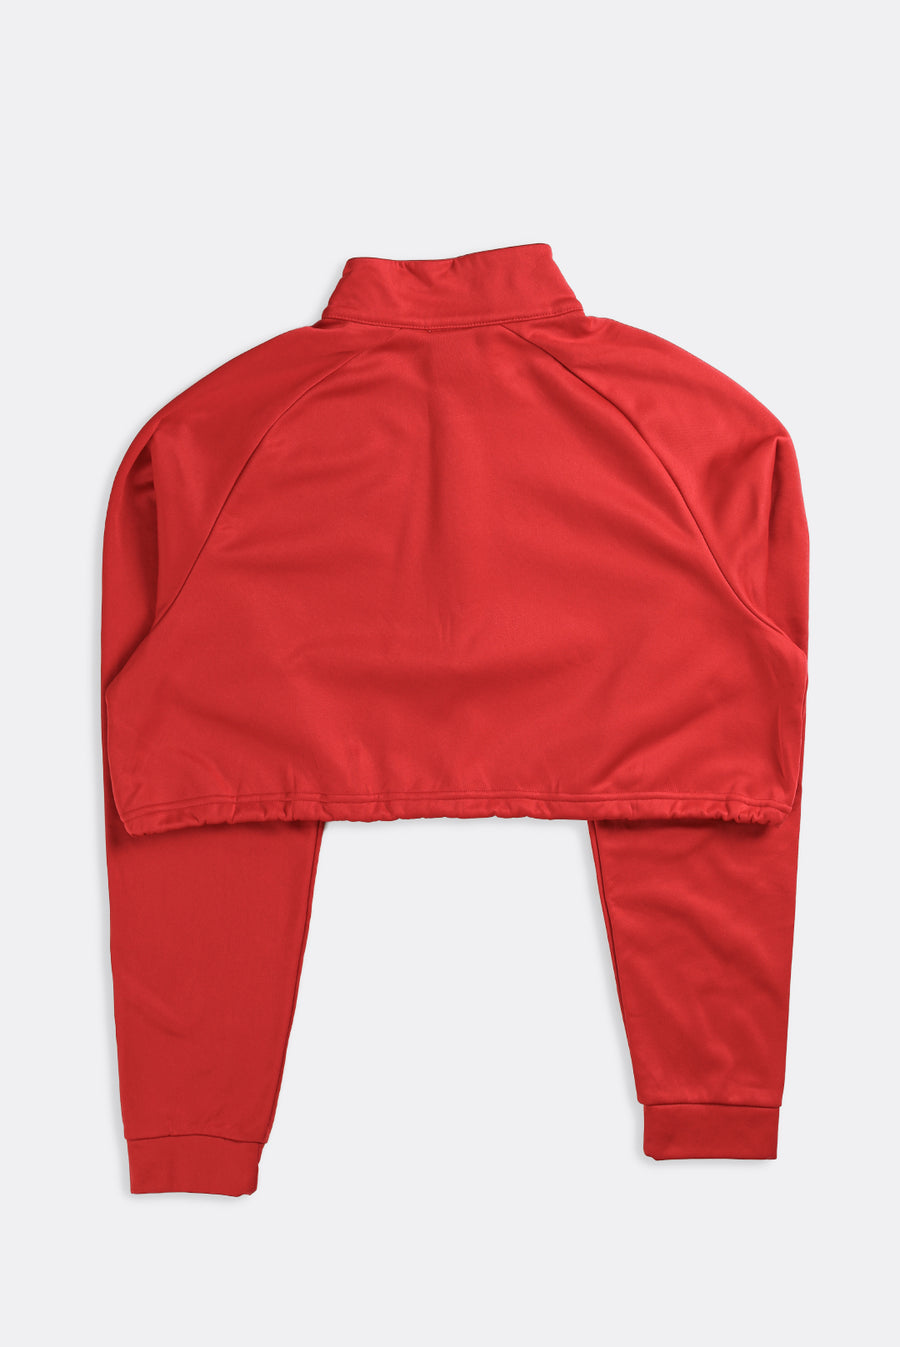 Rework Nike Crop Athletic Sweater - XL